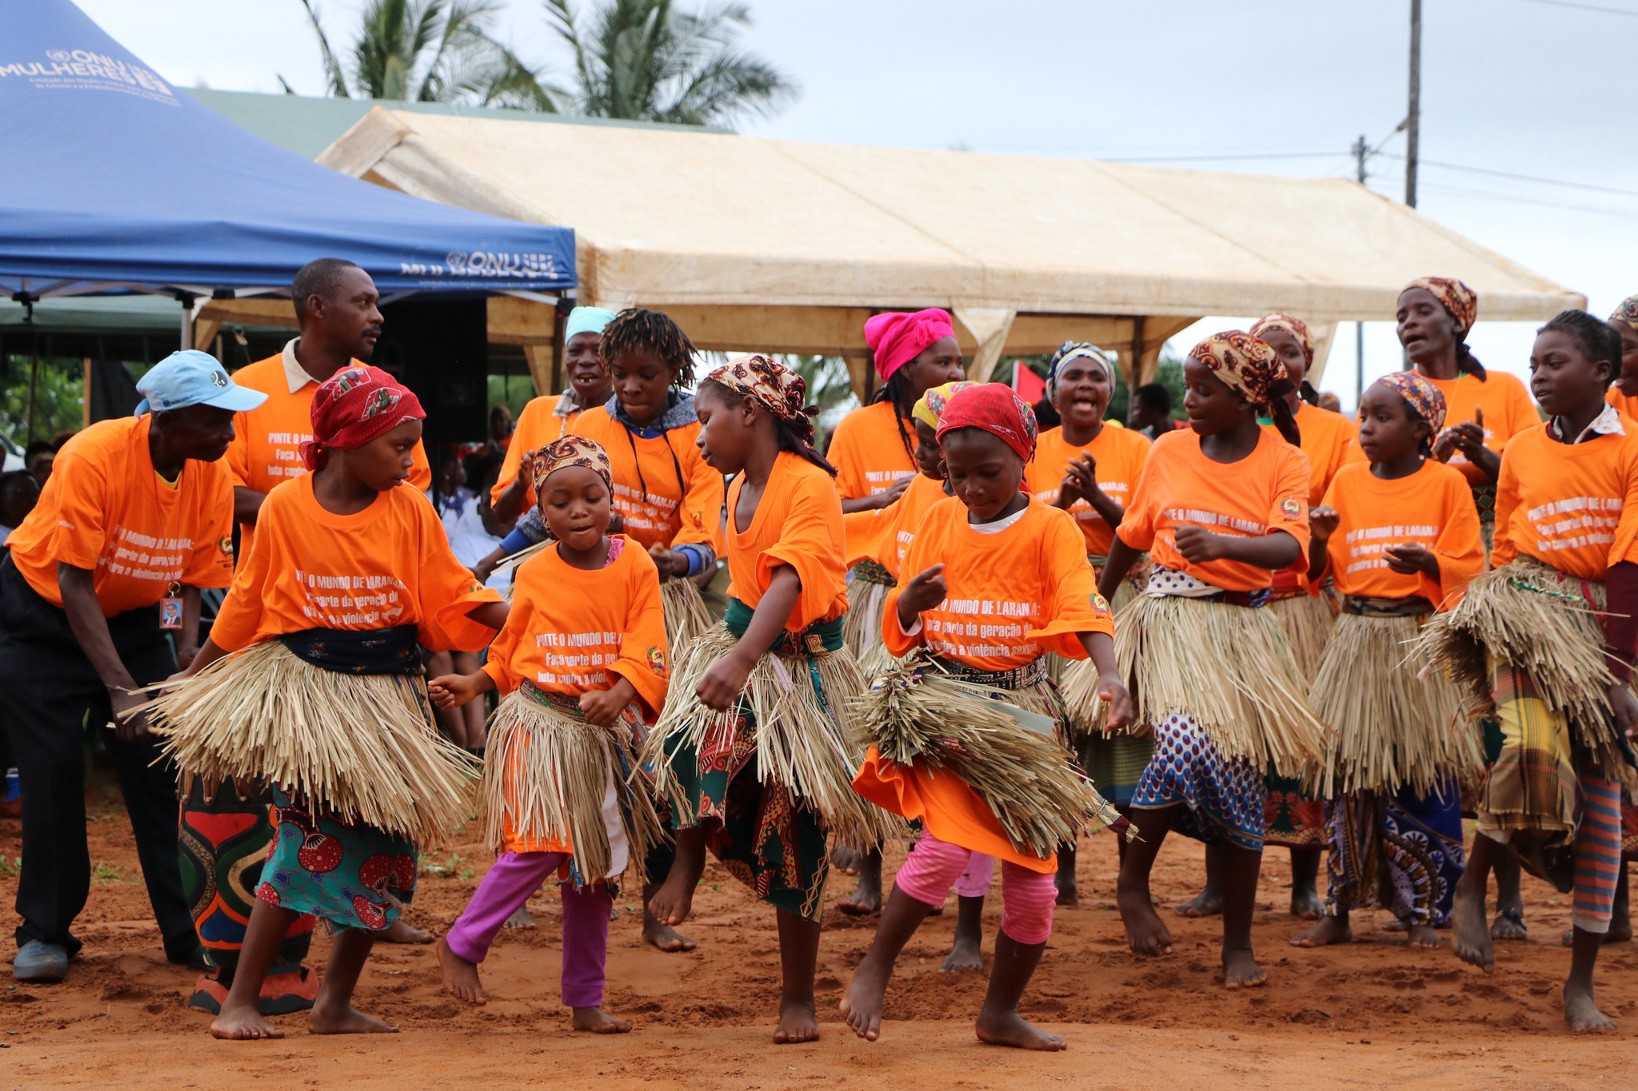 Local cultural group composed of three generations performs dances to open the event. Photo: Leovigildo Nhampule